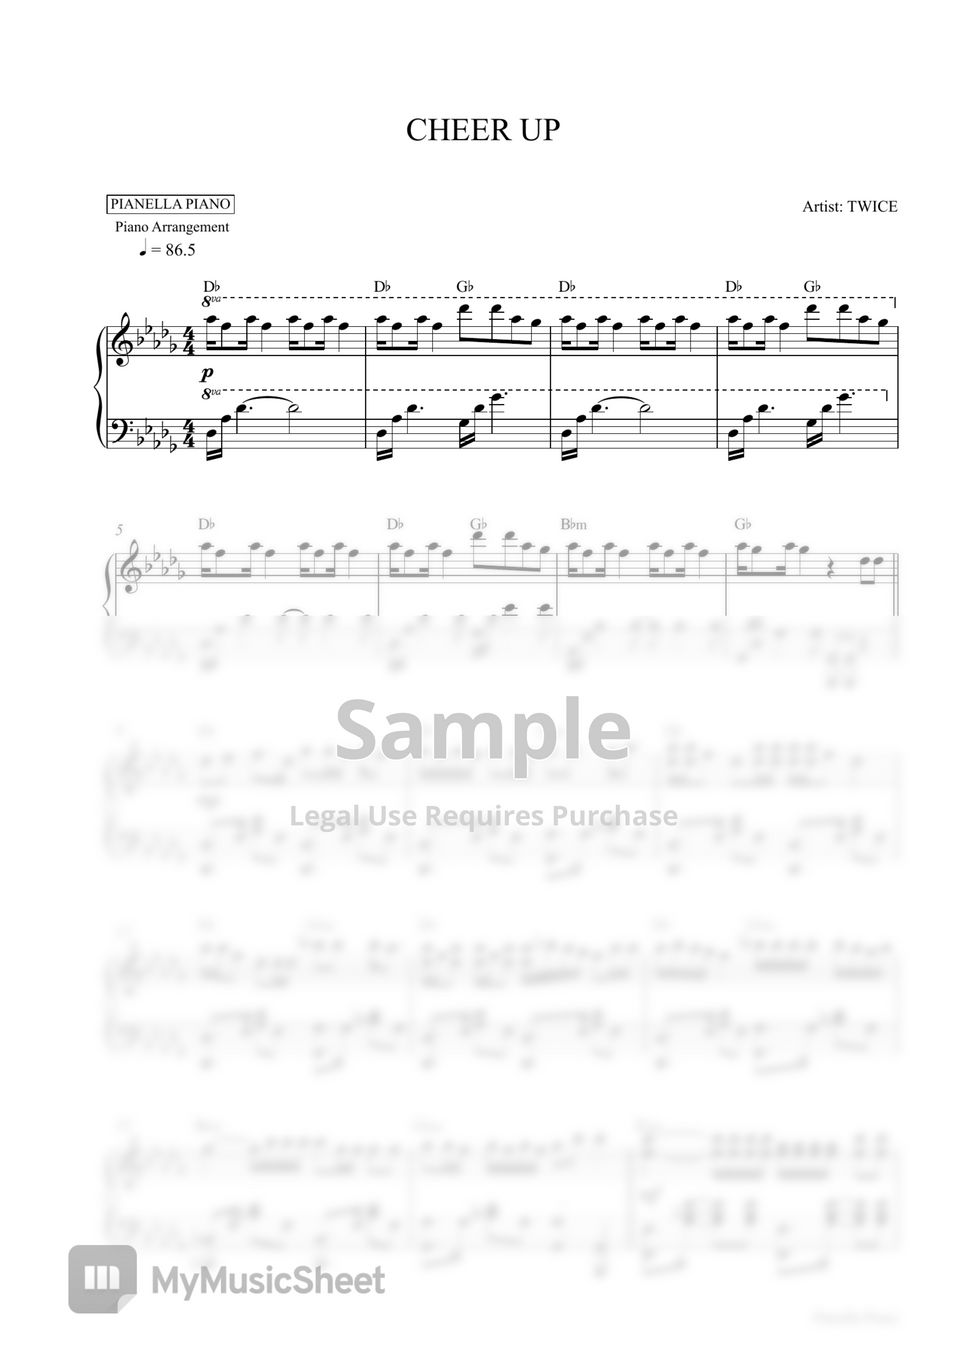 TWICE - CHEER UP (Piano Sheet) by Pianella Piano